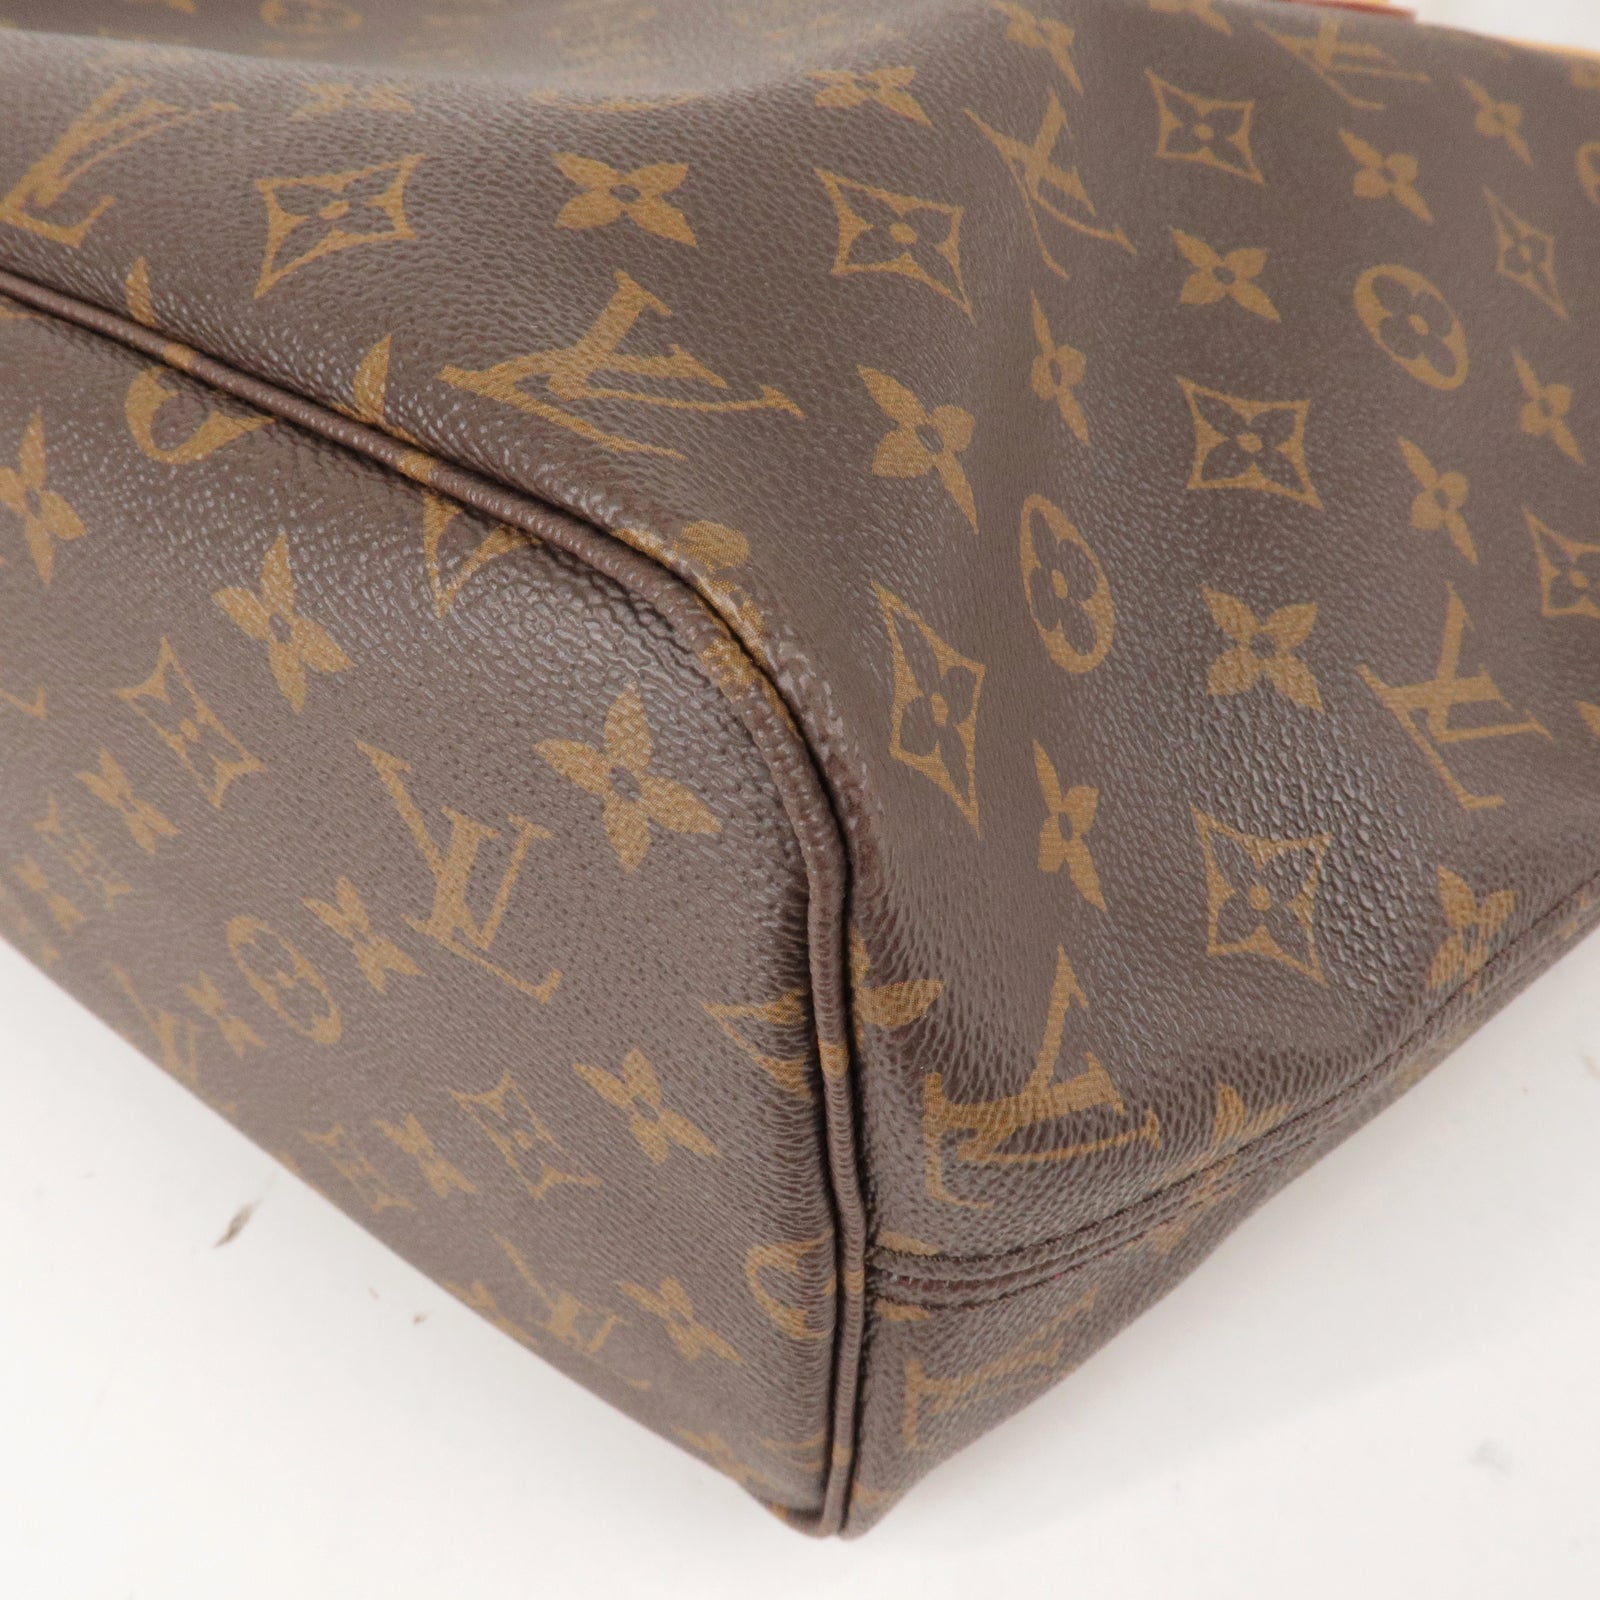 Louis Vuitton City Cruiser Handbag Monogram Canvas and Leather PM